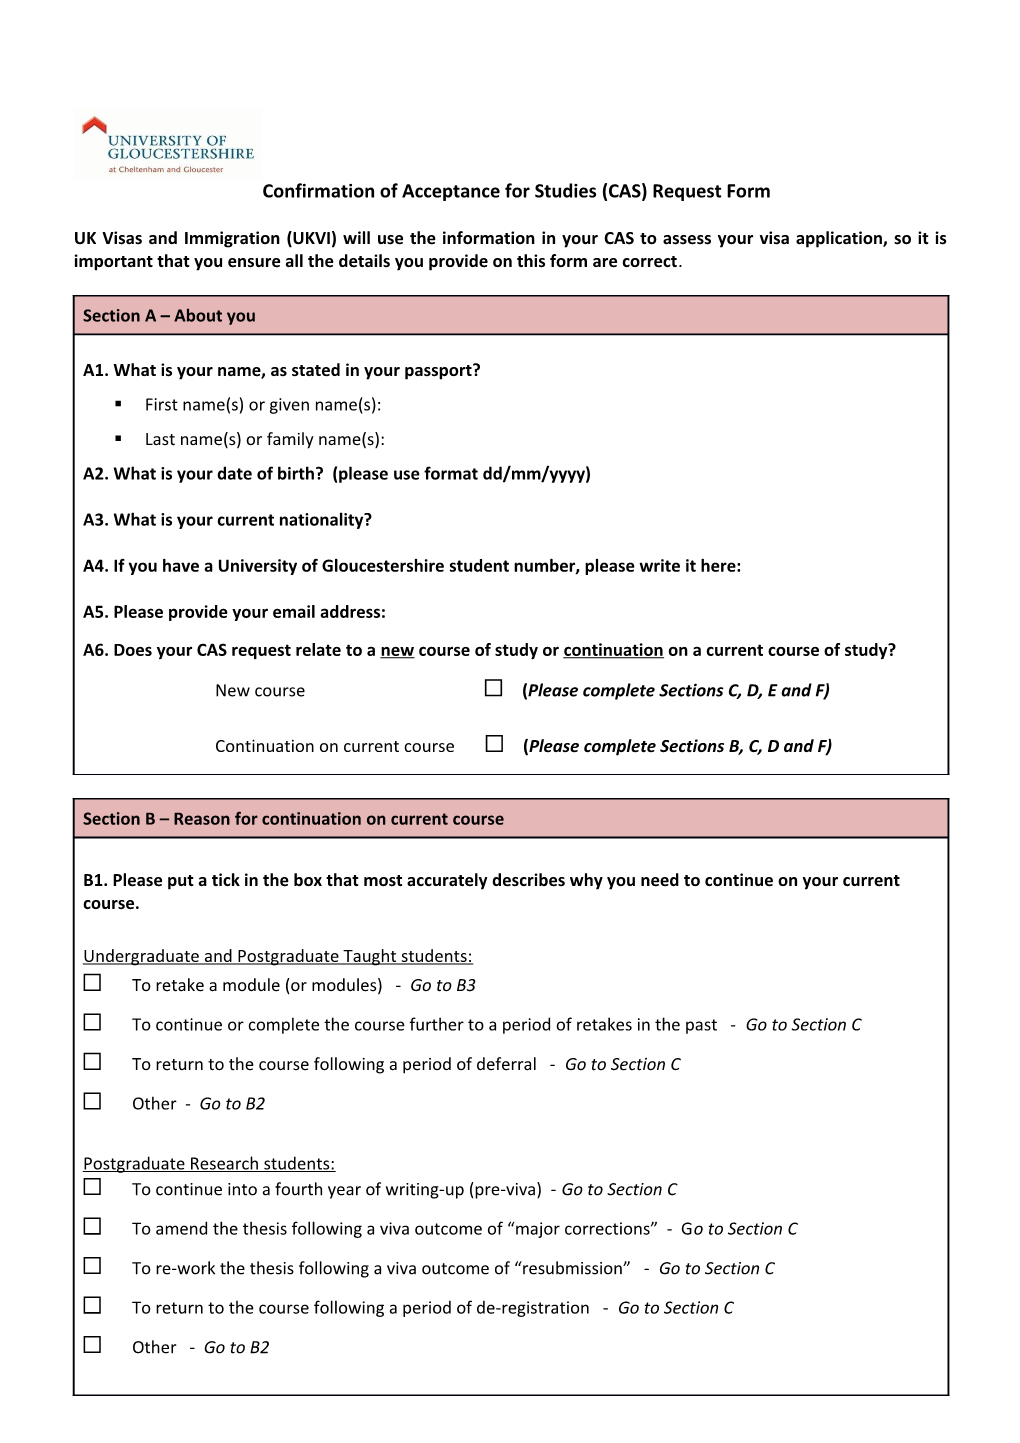 Confirmation of Acceptance for Studies (CAS) Request Form